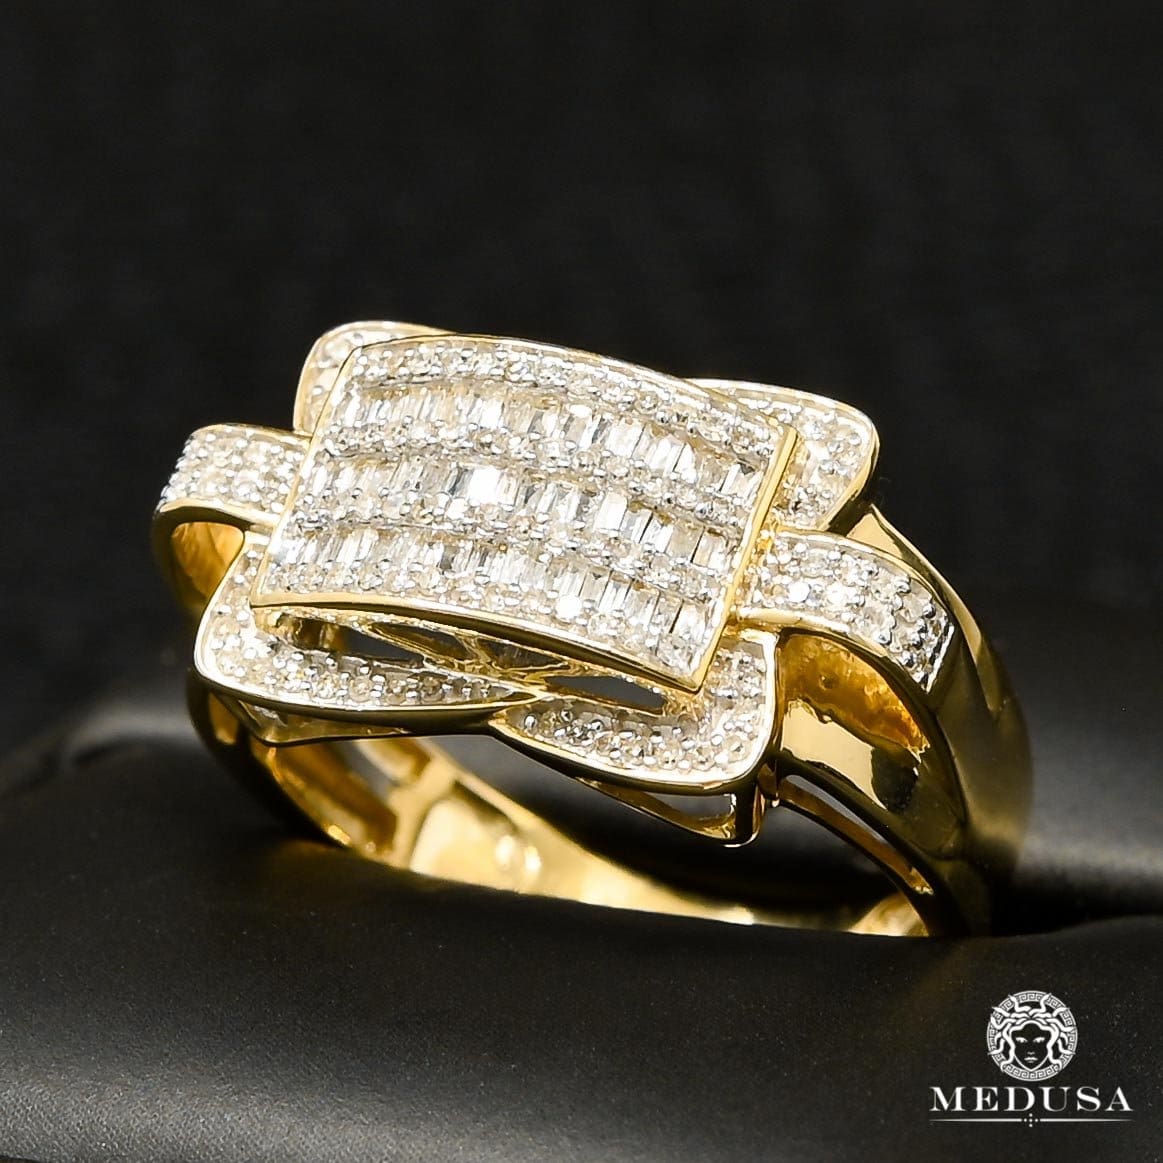 10K Gold Diamond Ring | Square D18 Men's Ring - 1.00CT Diamond / Yellow Gold